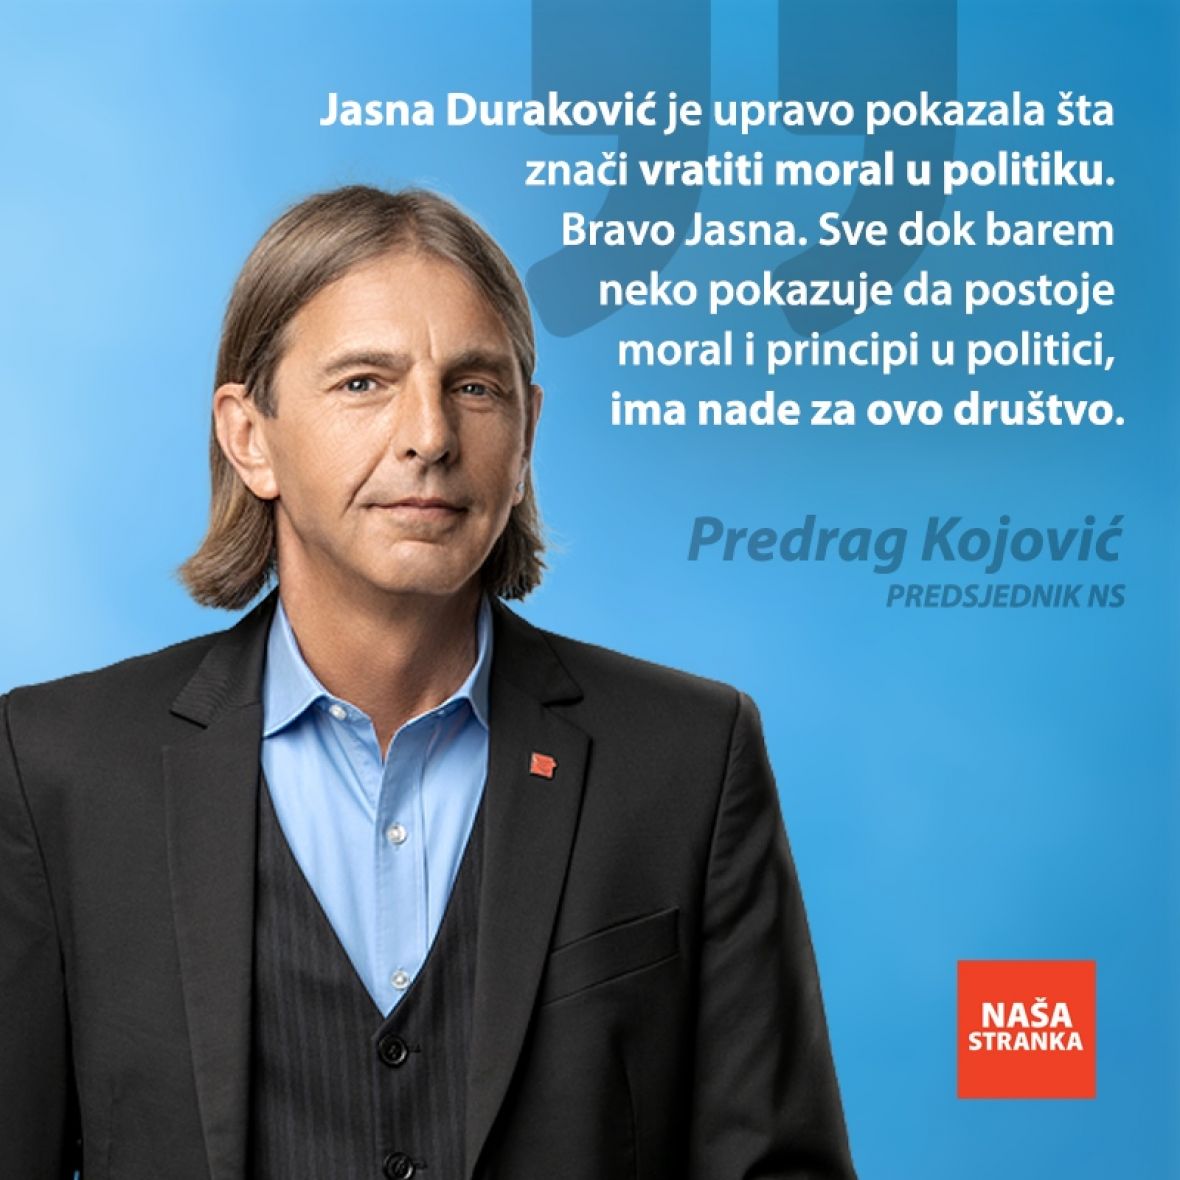 Predrag Kojović - undefined